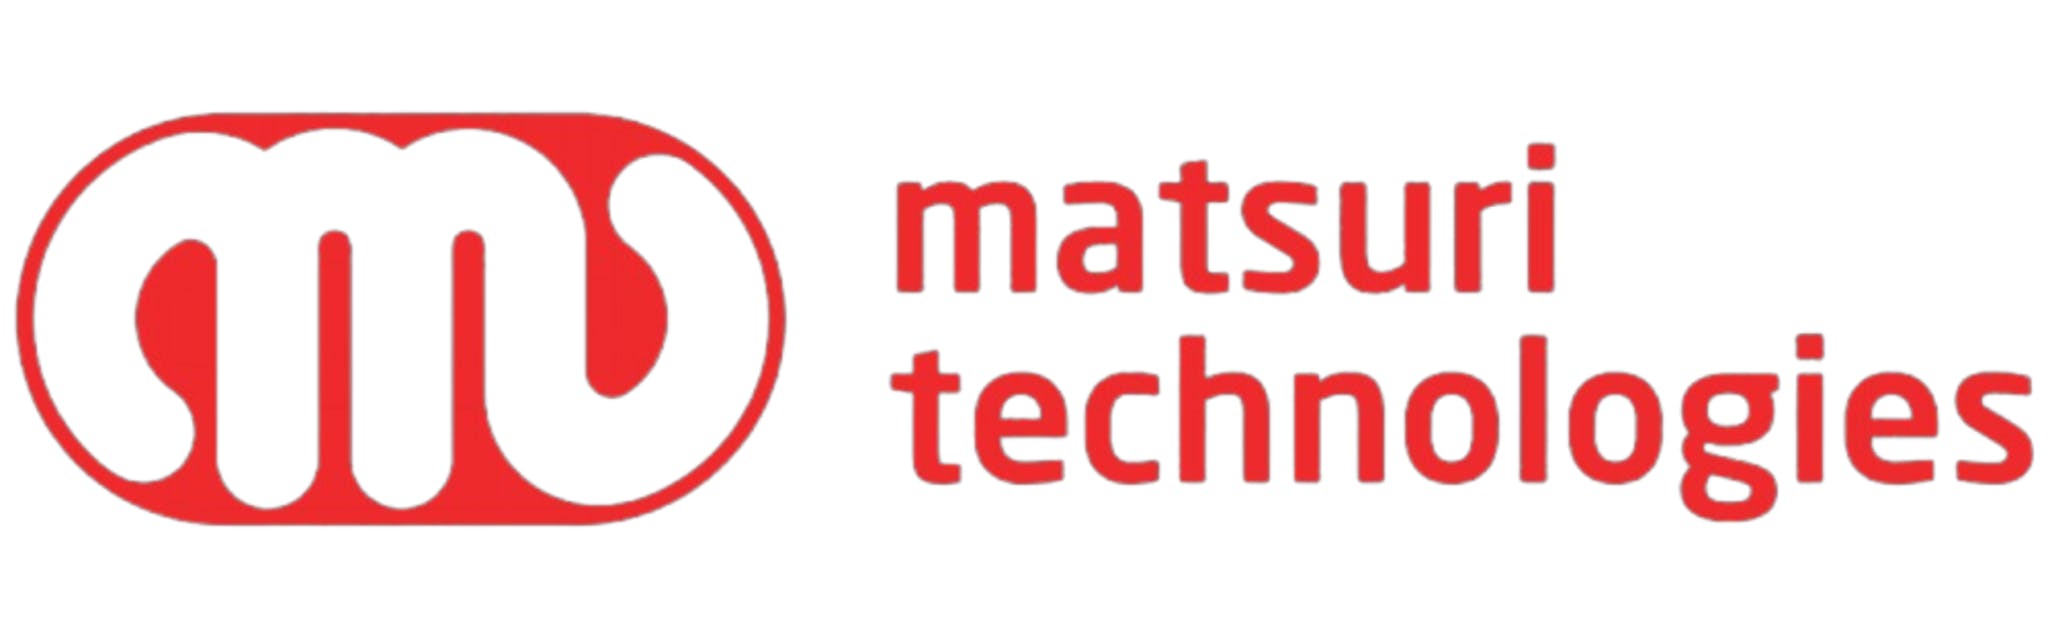 matsuri technologies株式会社 - メイン画像